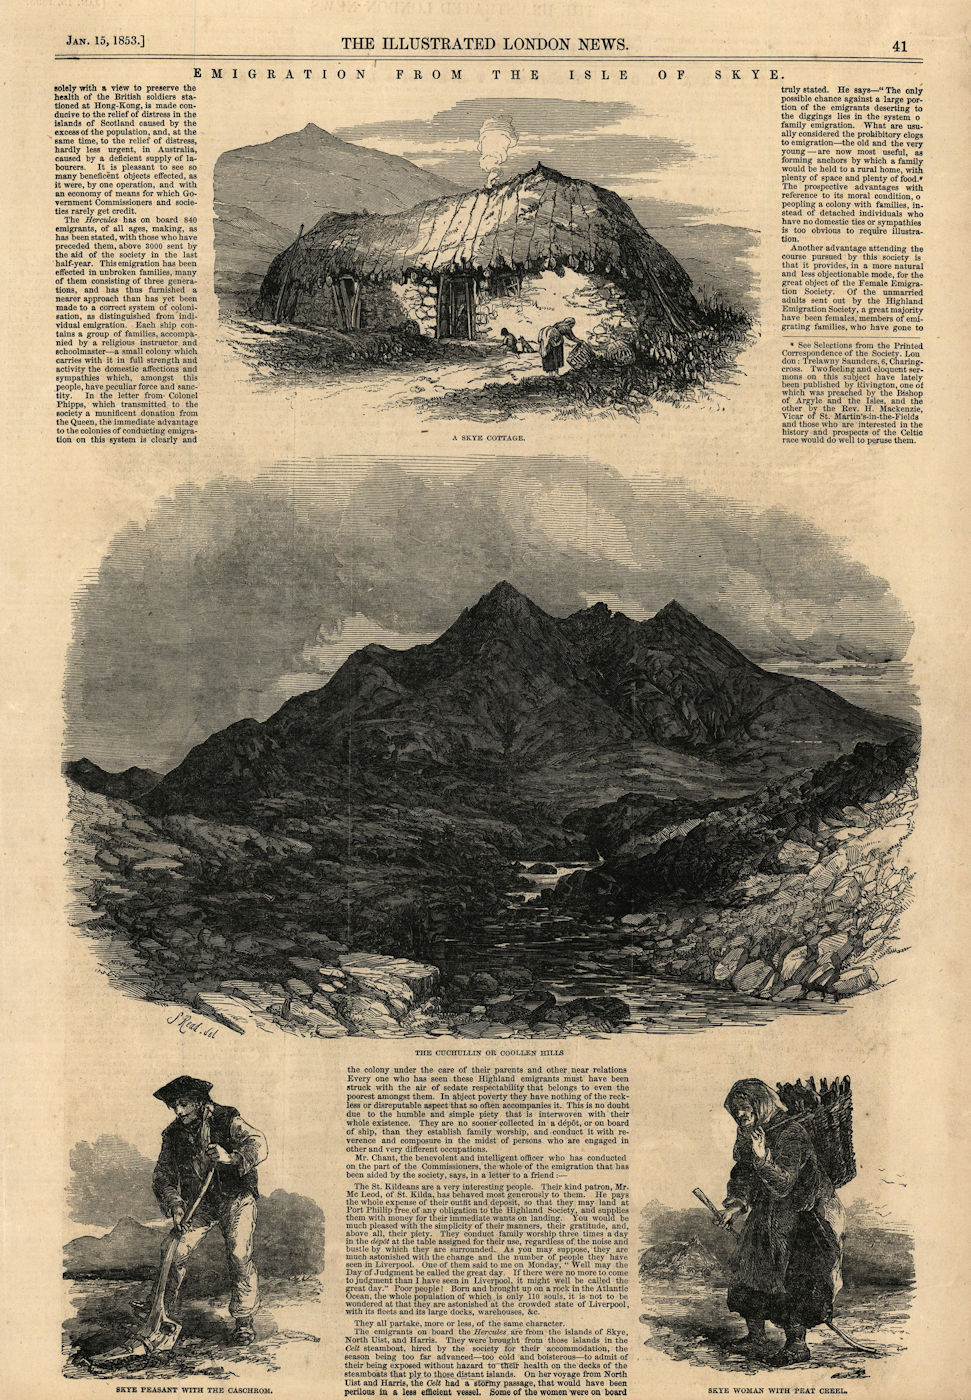 Associate Product Isle of Skye: Cottage. Cuillin Hills. Caschrom. Peat creel. Scotland 1853